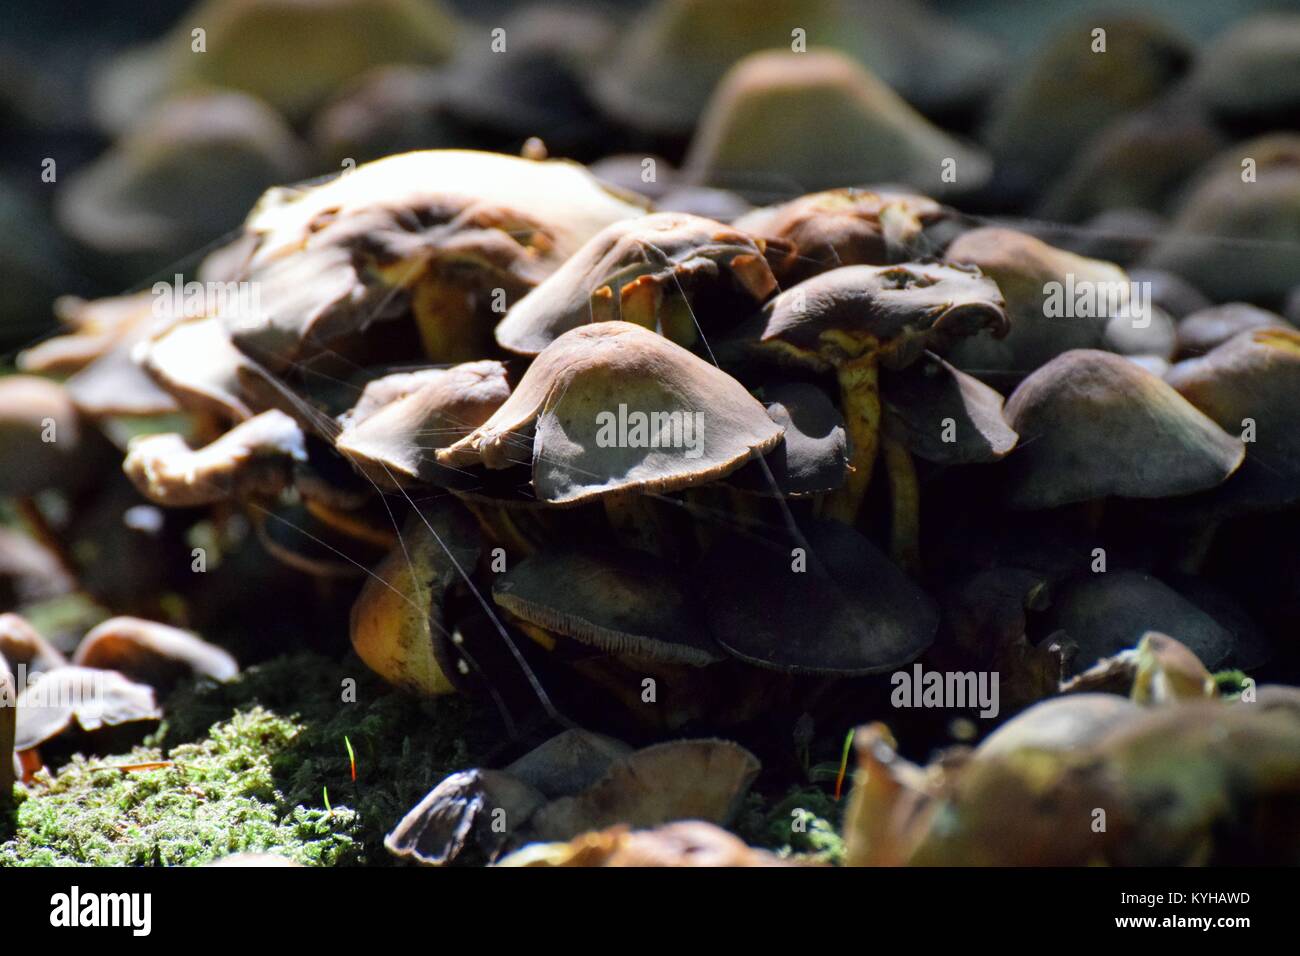 Cobweb drapped over mushrooms Stock Photo